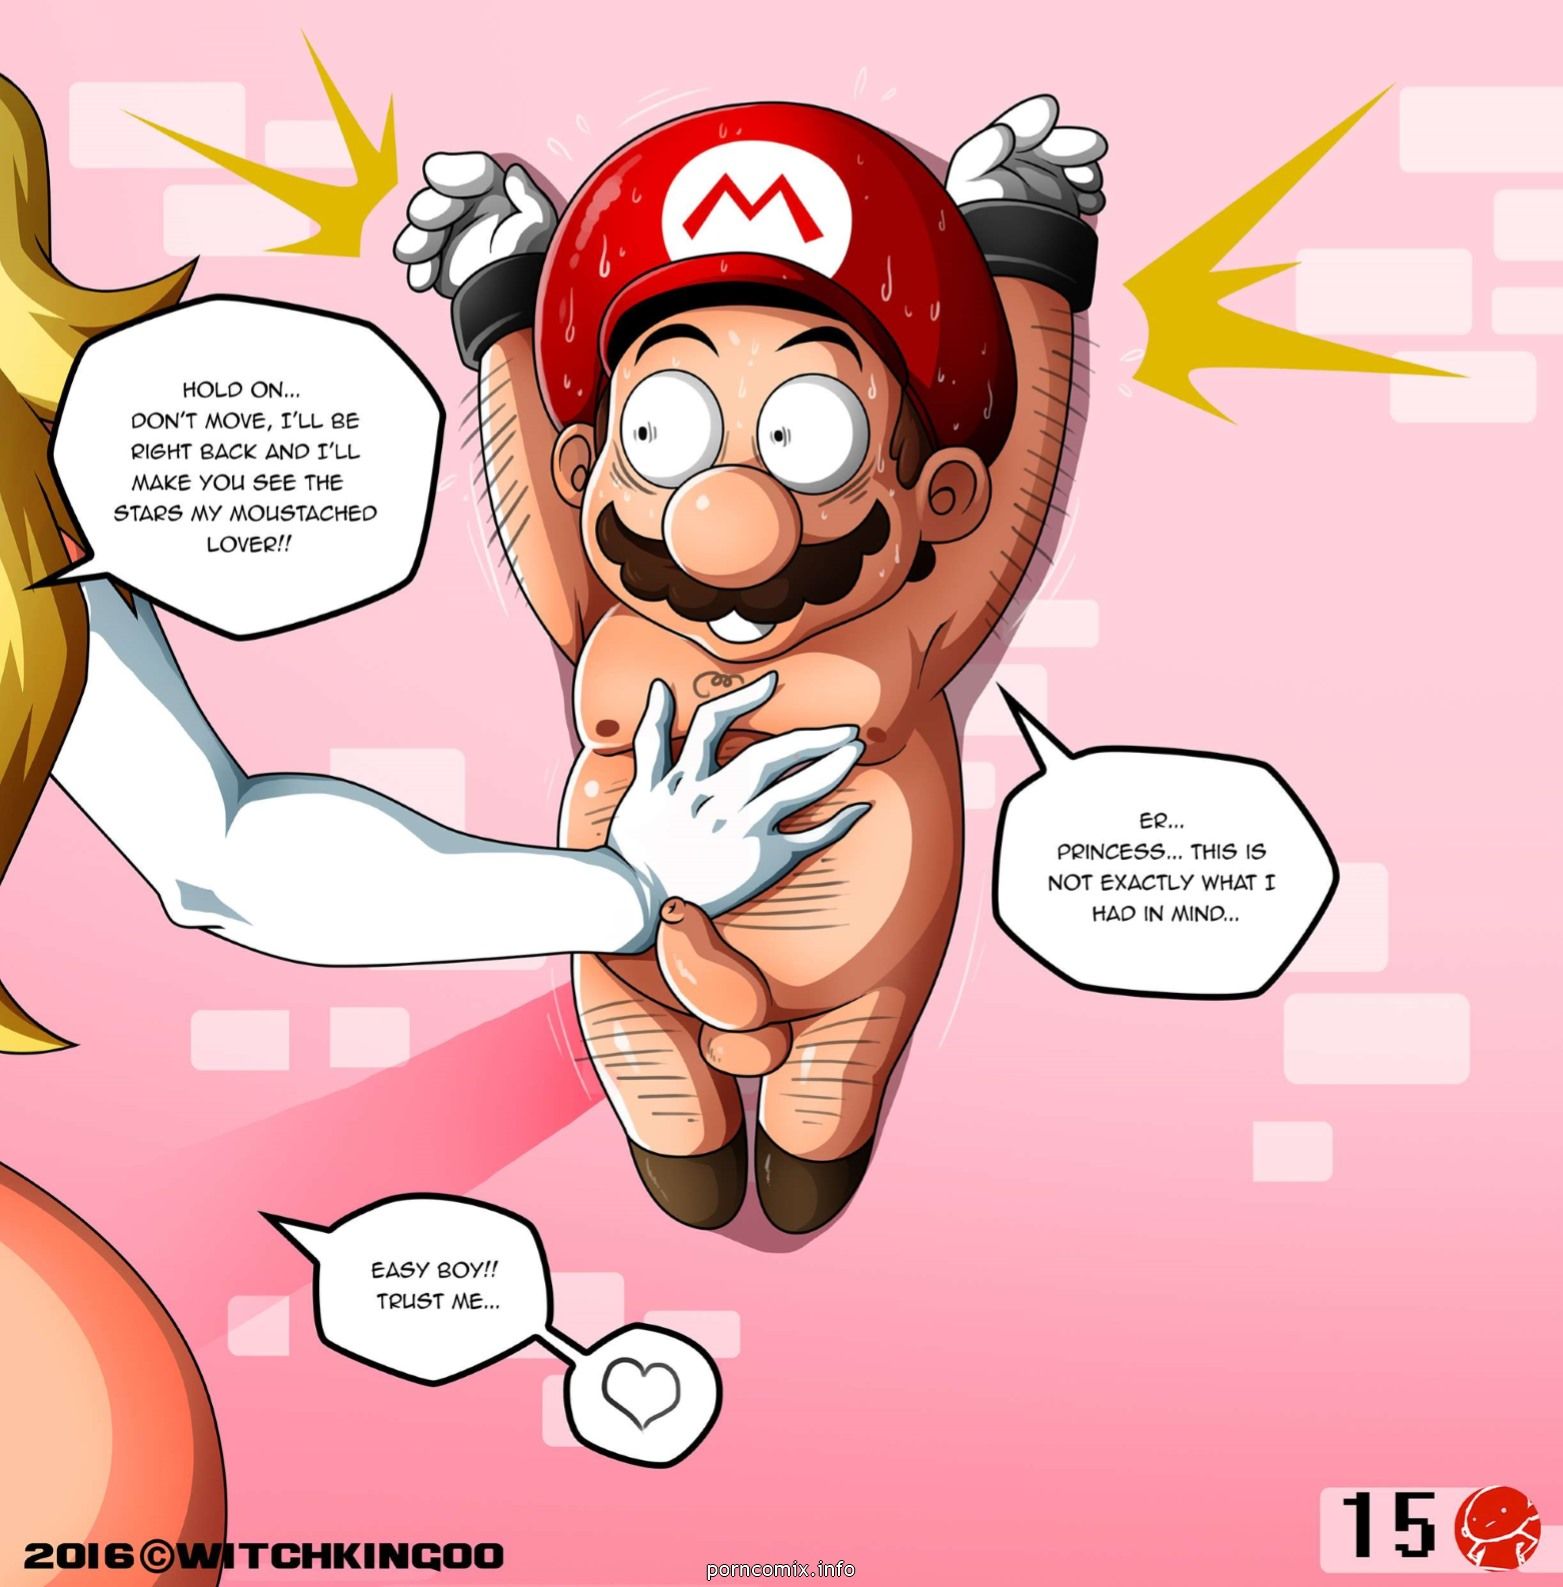 Witchking00,Princess Peach - Thanks You Mario page 16